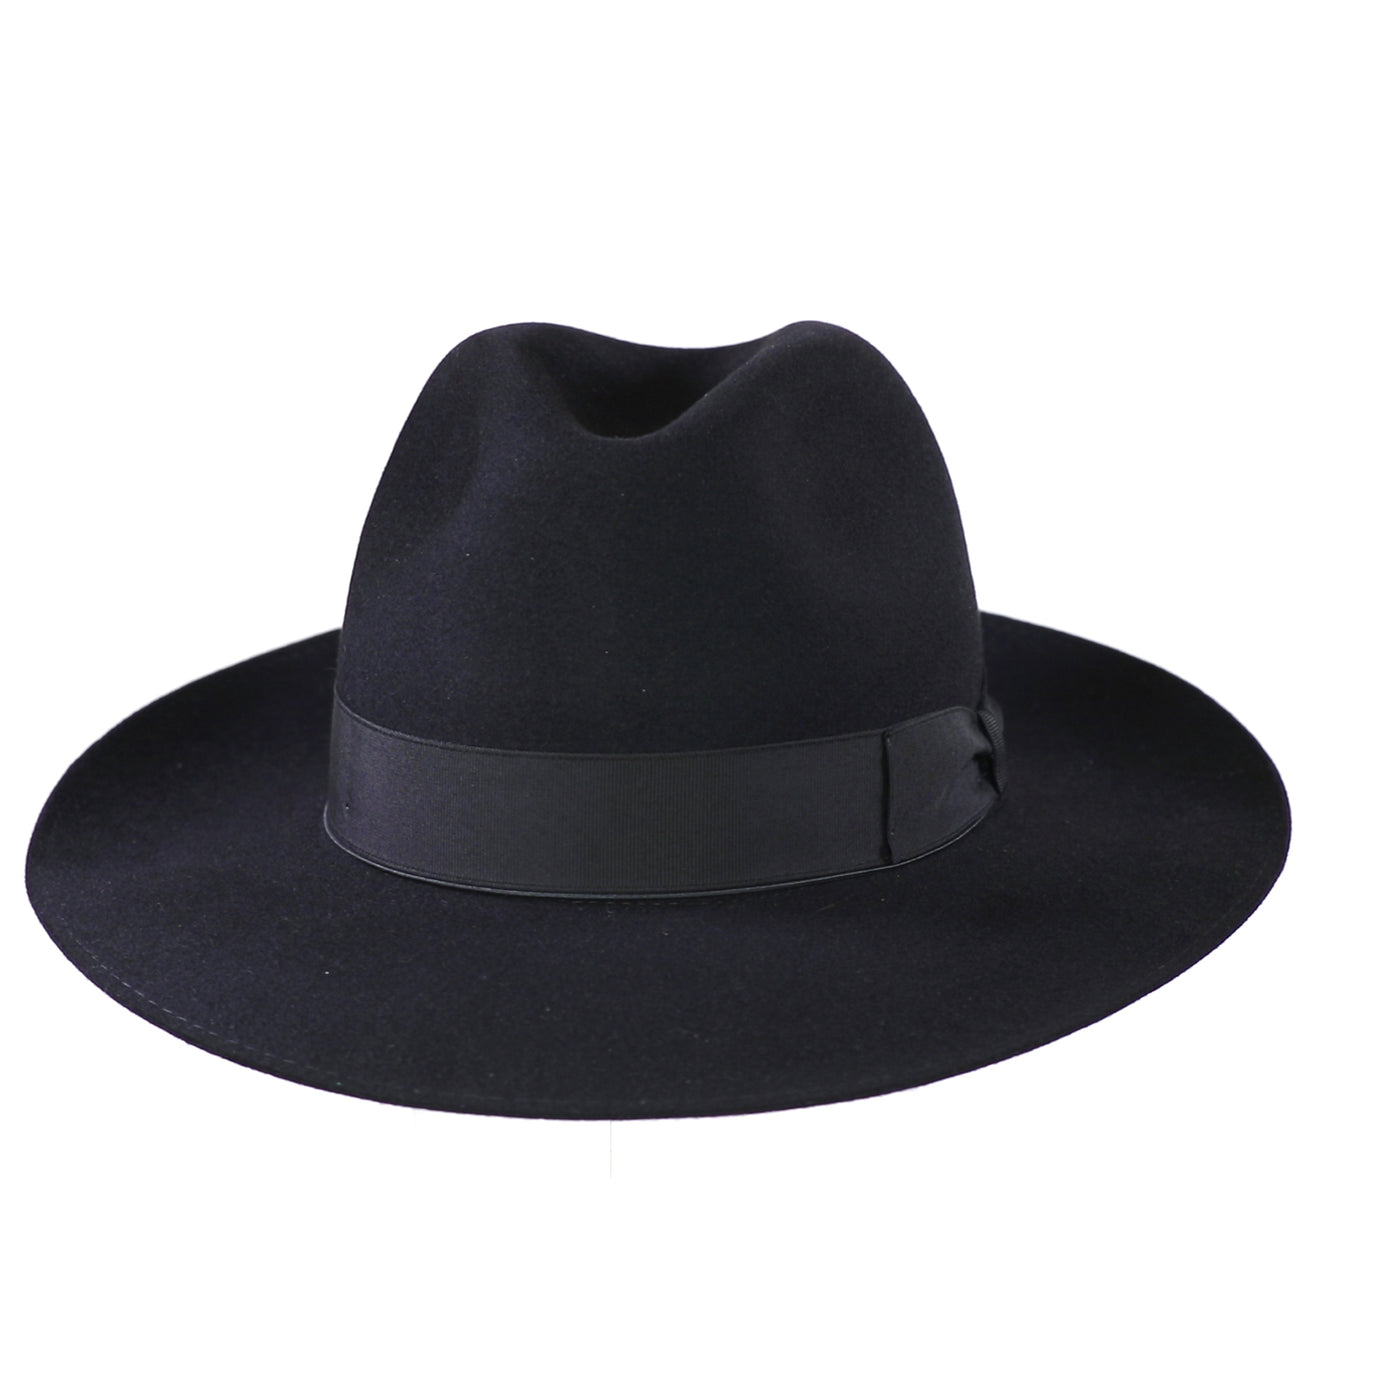 Andelli 278, product_type] - Borsalino for Atica fedora hat